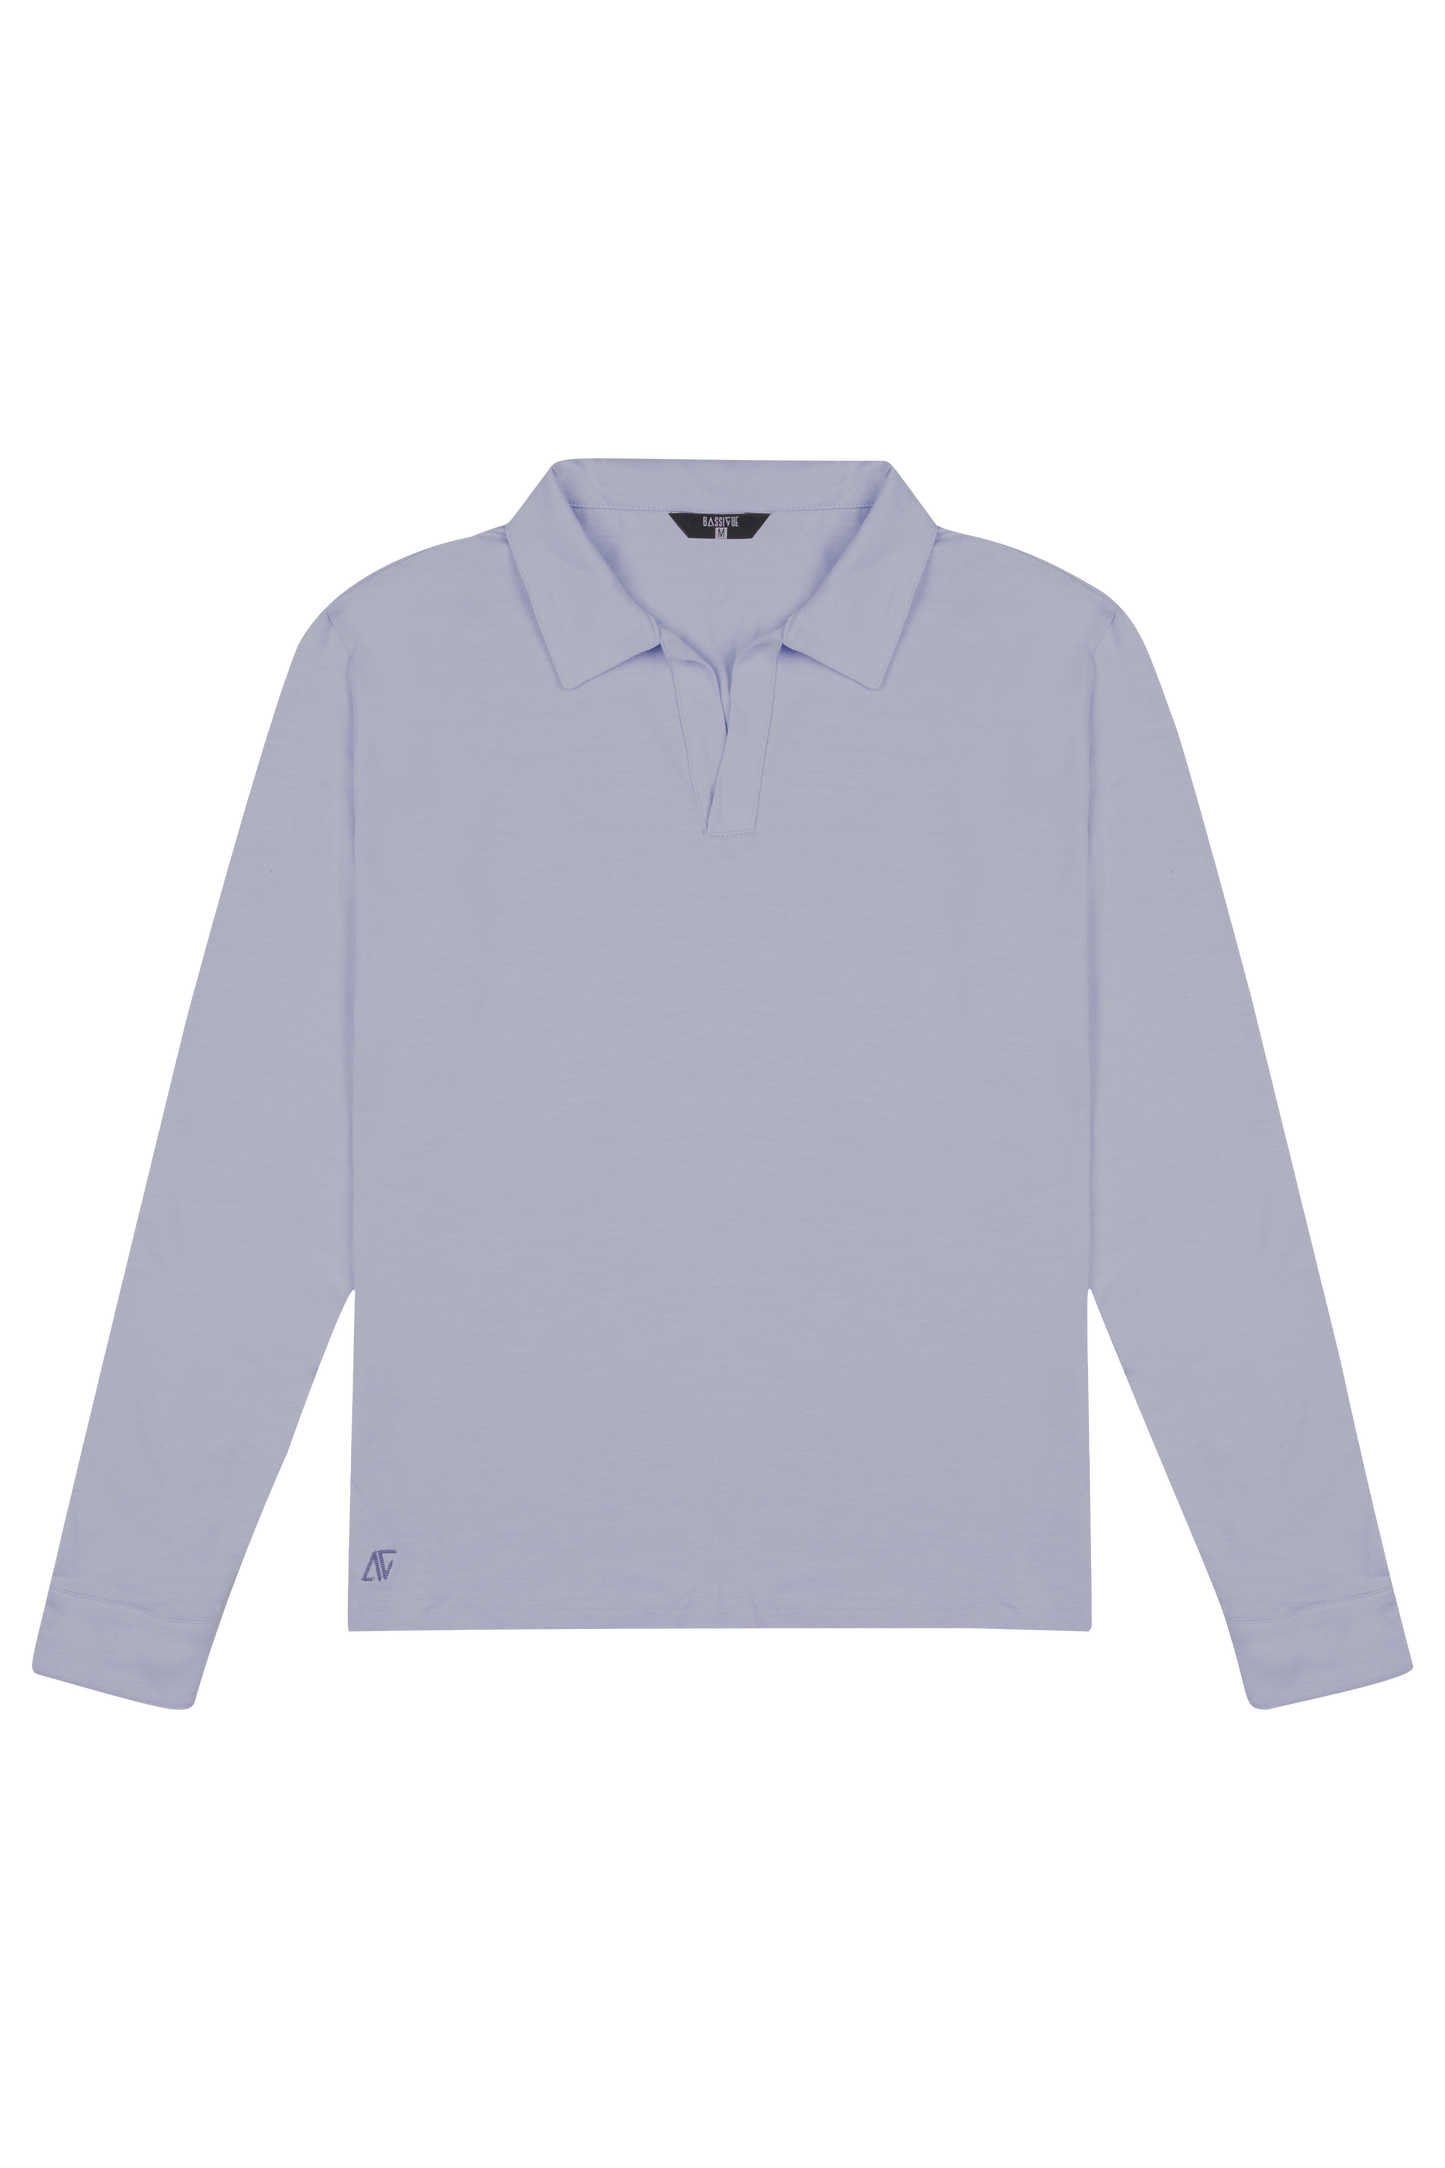 Blue Long Sleeve Polo Shirt